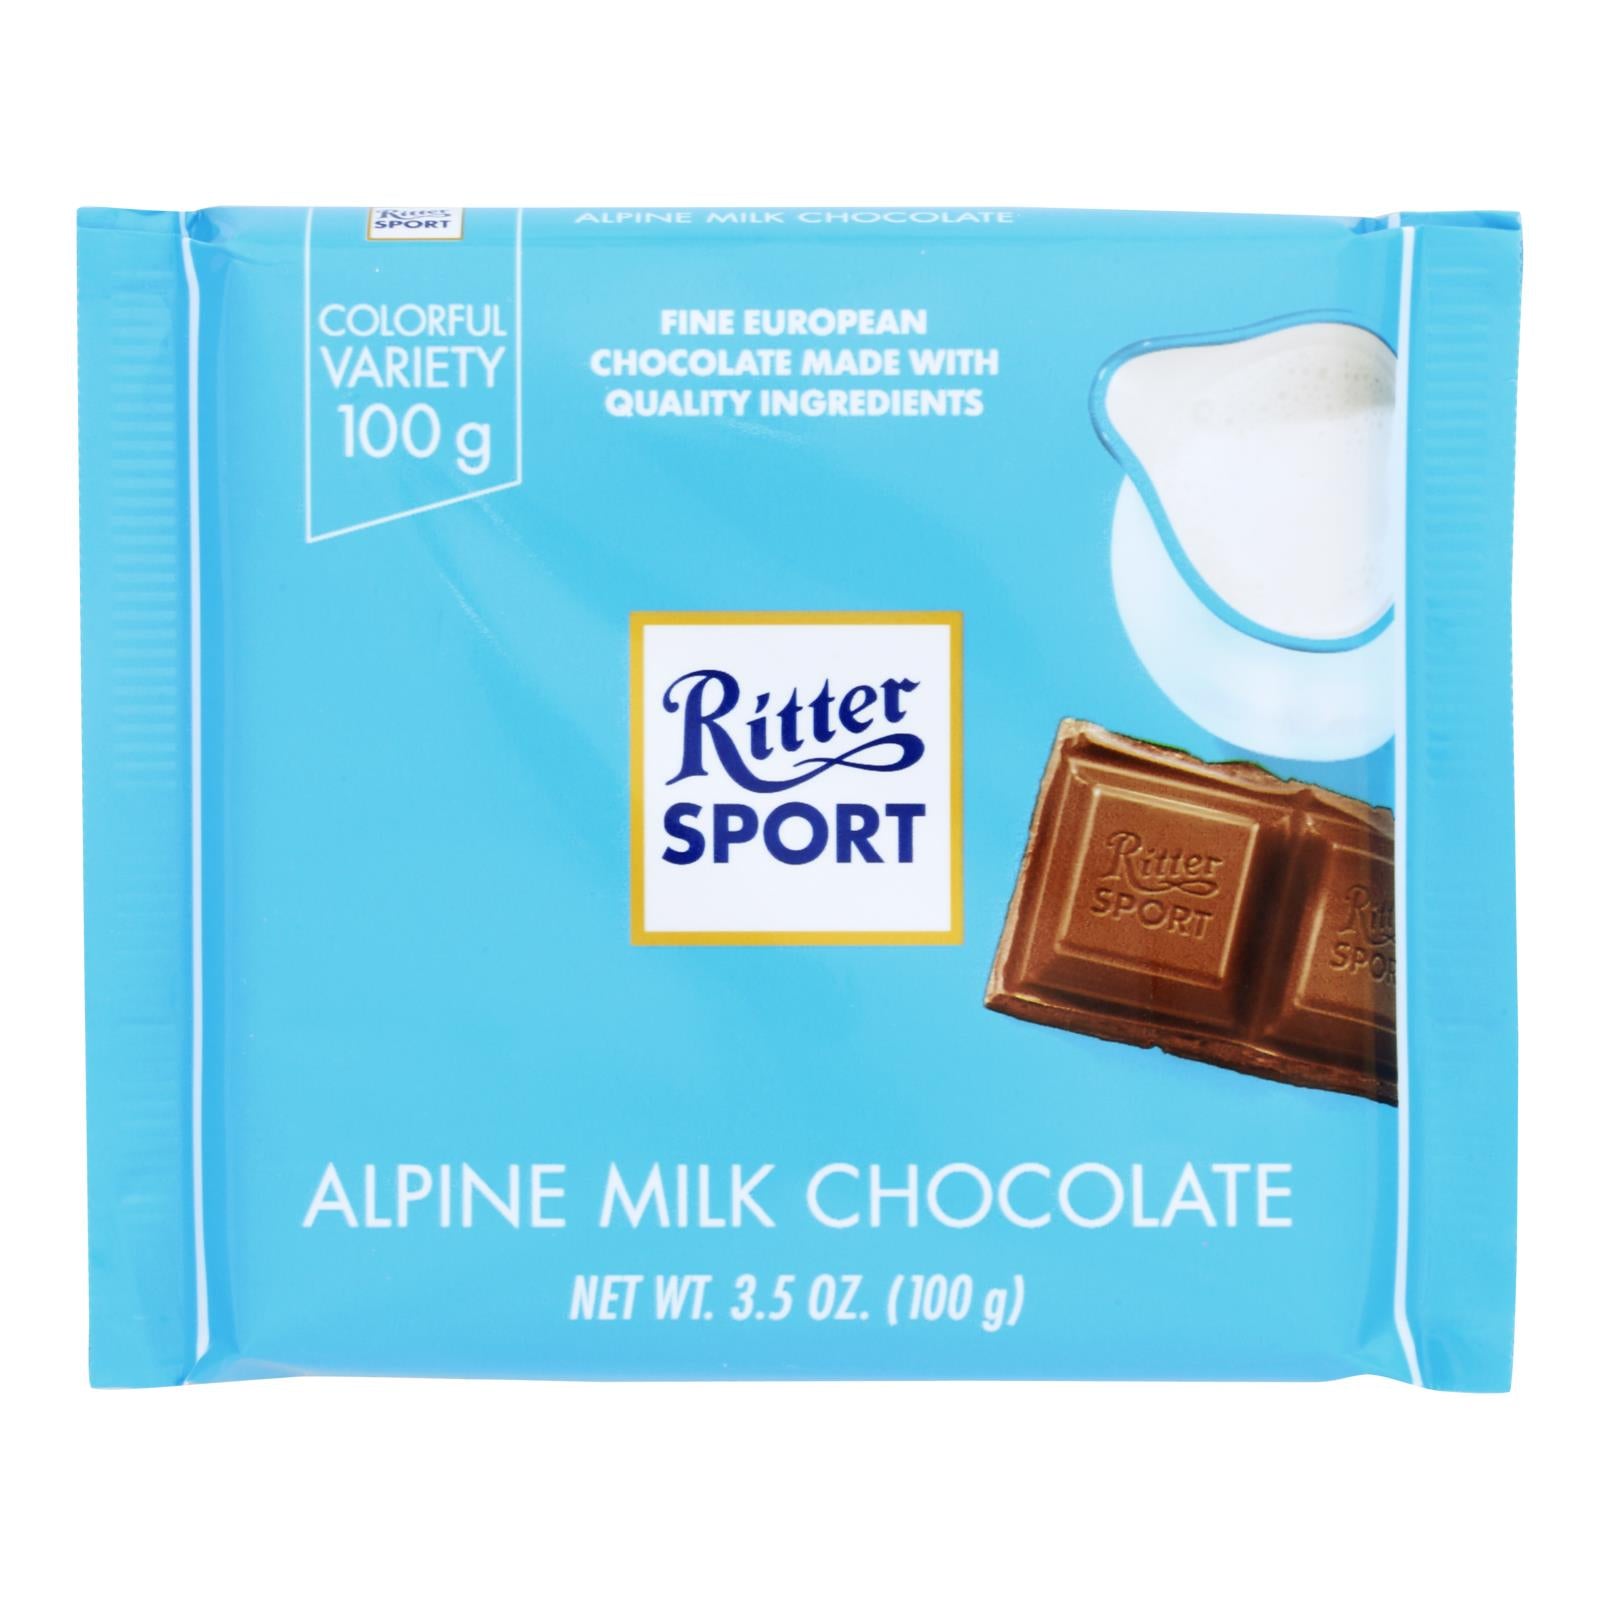 Ritter Sport Chocolate Bar - Milk Chocolate - 30 Percent Cocoa - Alpine - 3.5 oz Bars - Case of 12